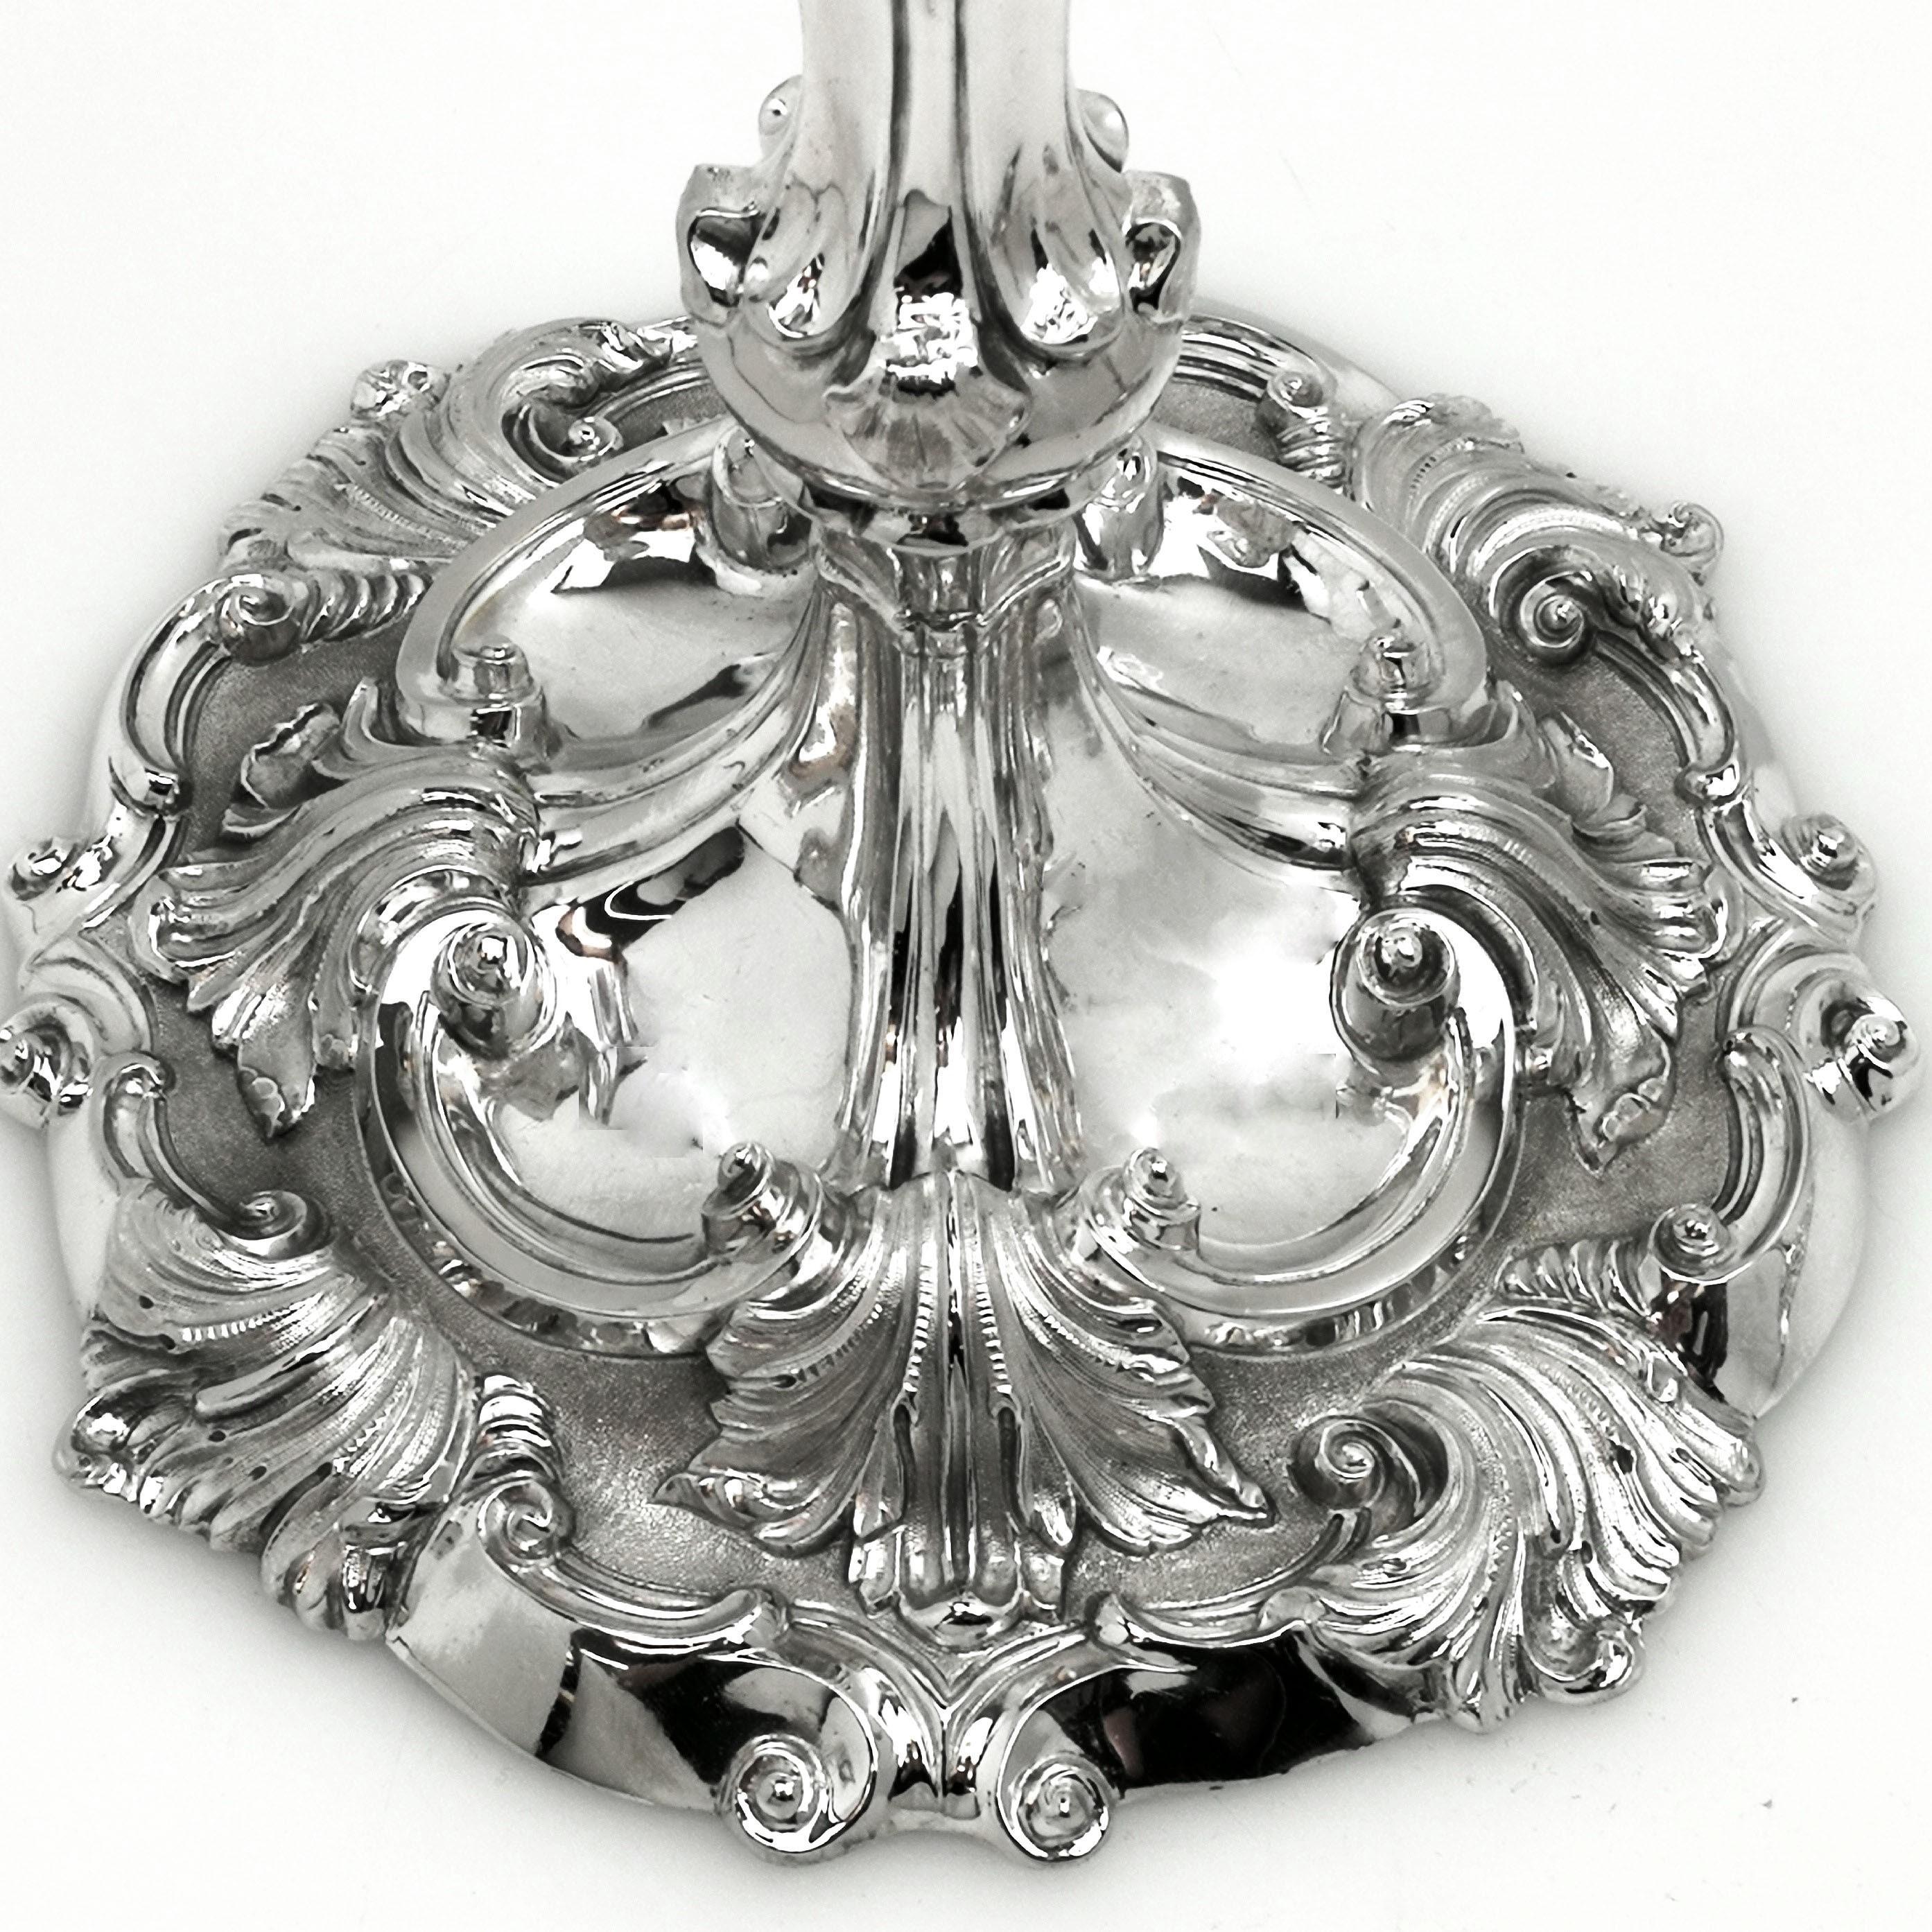 Pair Tiffany & Co Sterling Silver Candelabra Candlesticks English Hallmark 1956  6